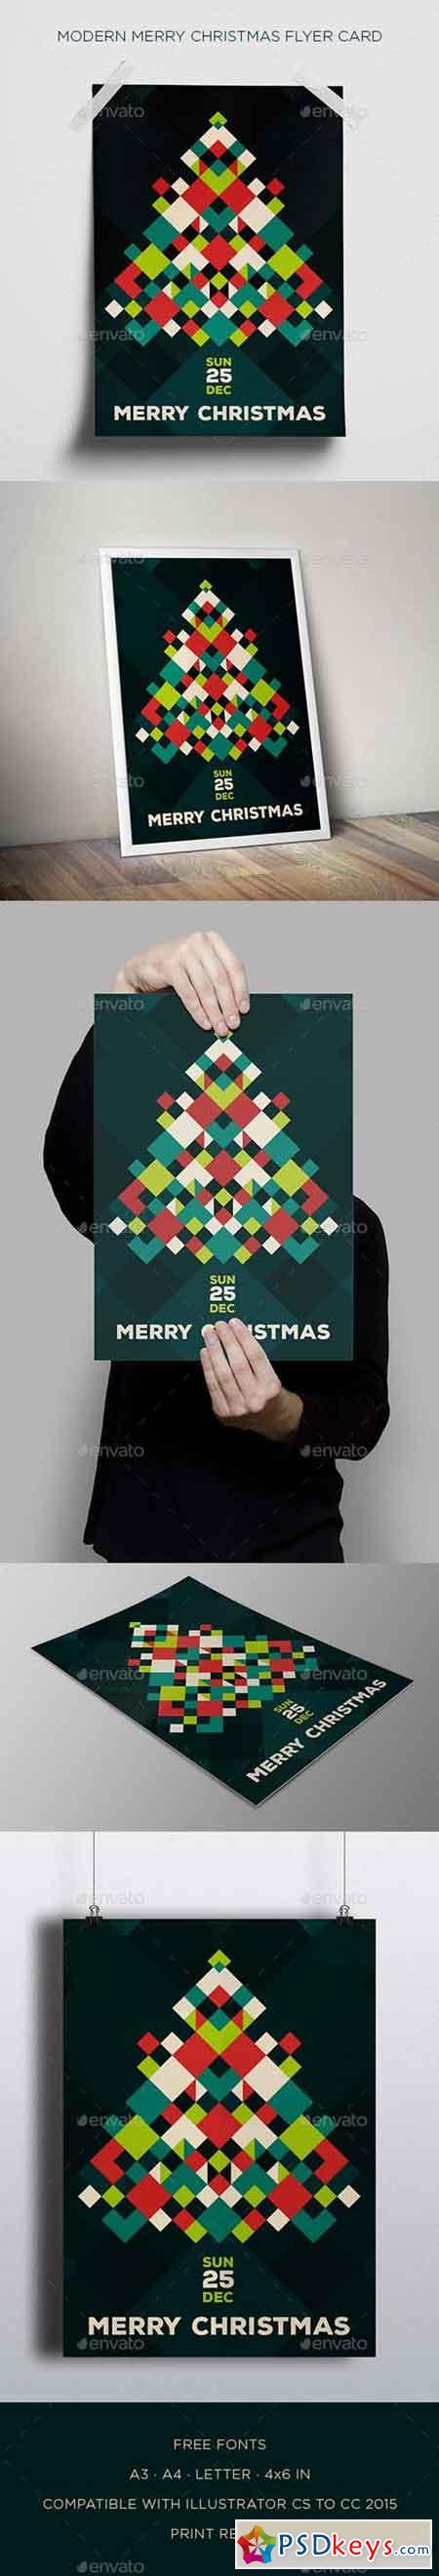 Modern Merry Christmas Flyer Card 18835637